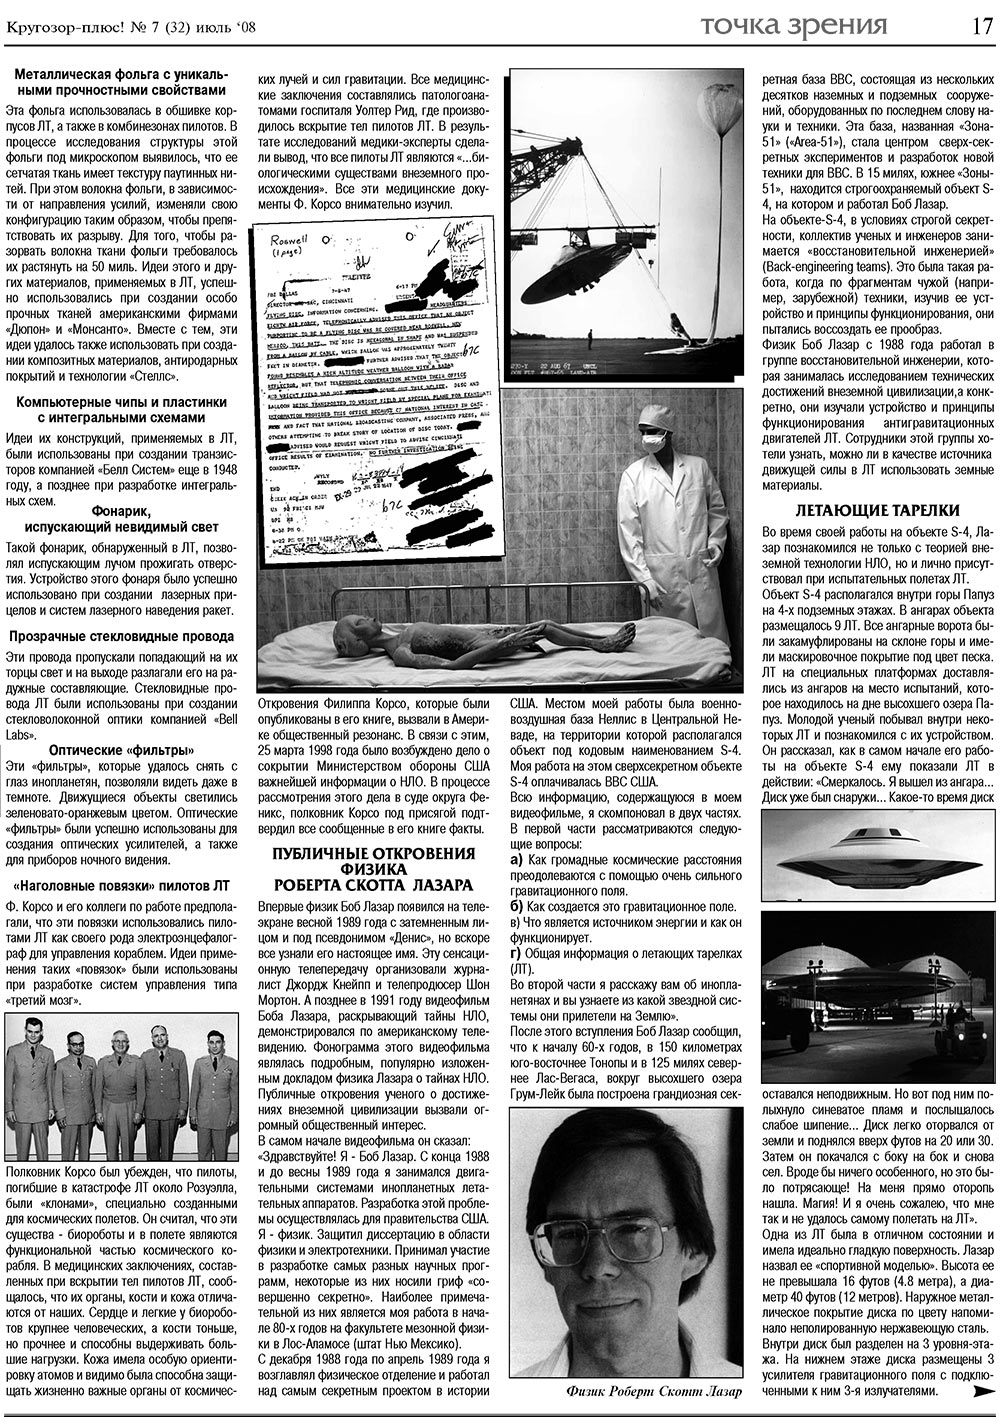 Кругозор плюс! (газета). 2008 год, номер 7, стр. 17